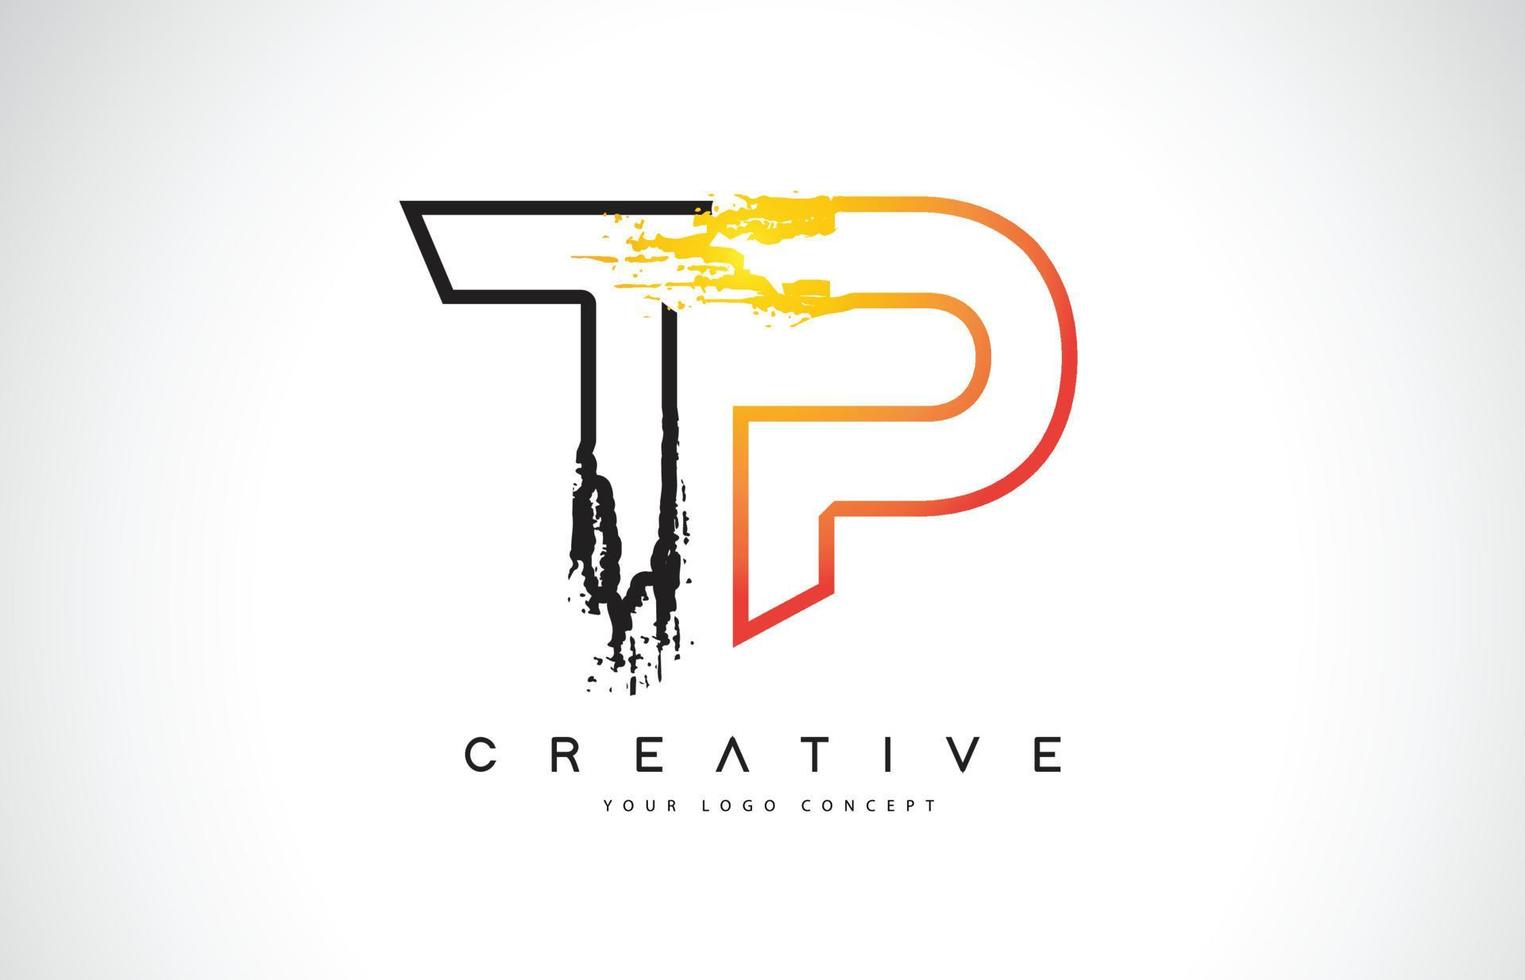 TP Creative Modern Logo Design with Orange and Black Colors. Monogram Stroke Letter Design. vector